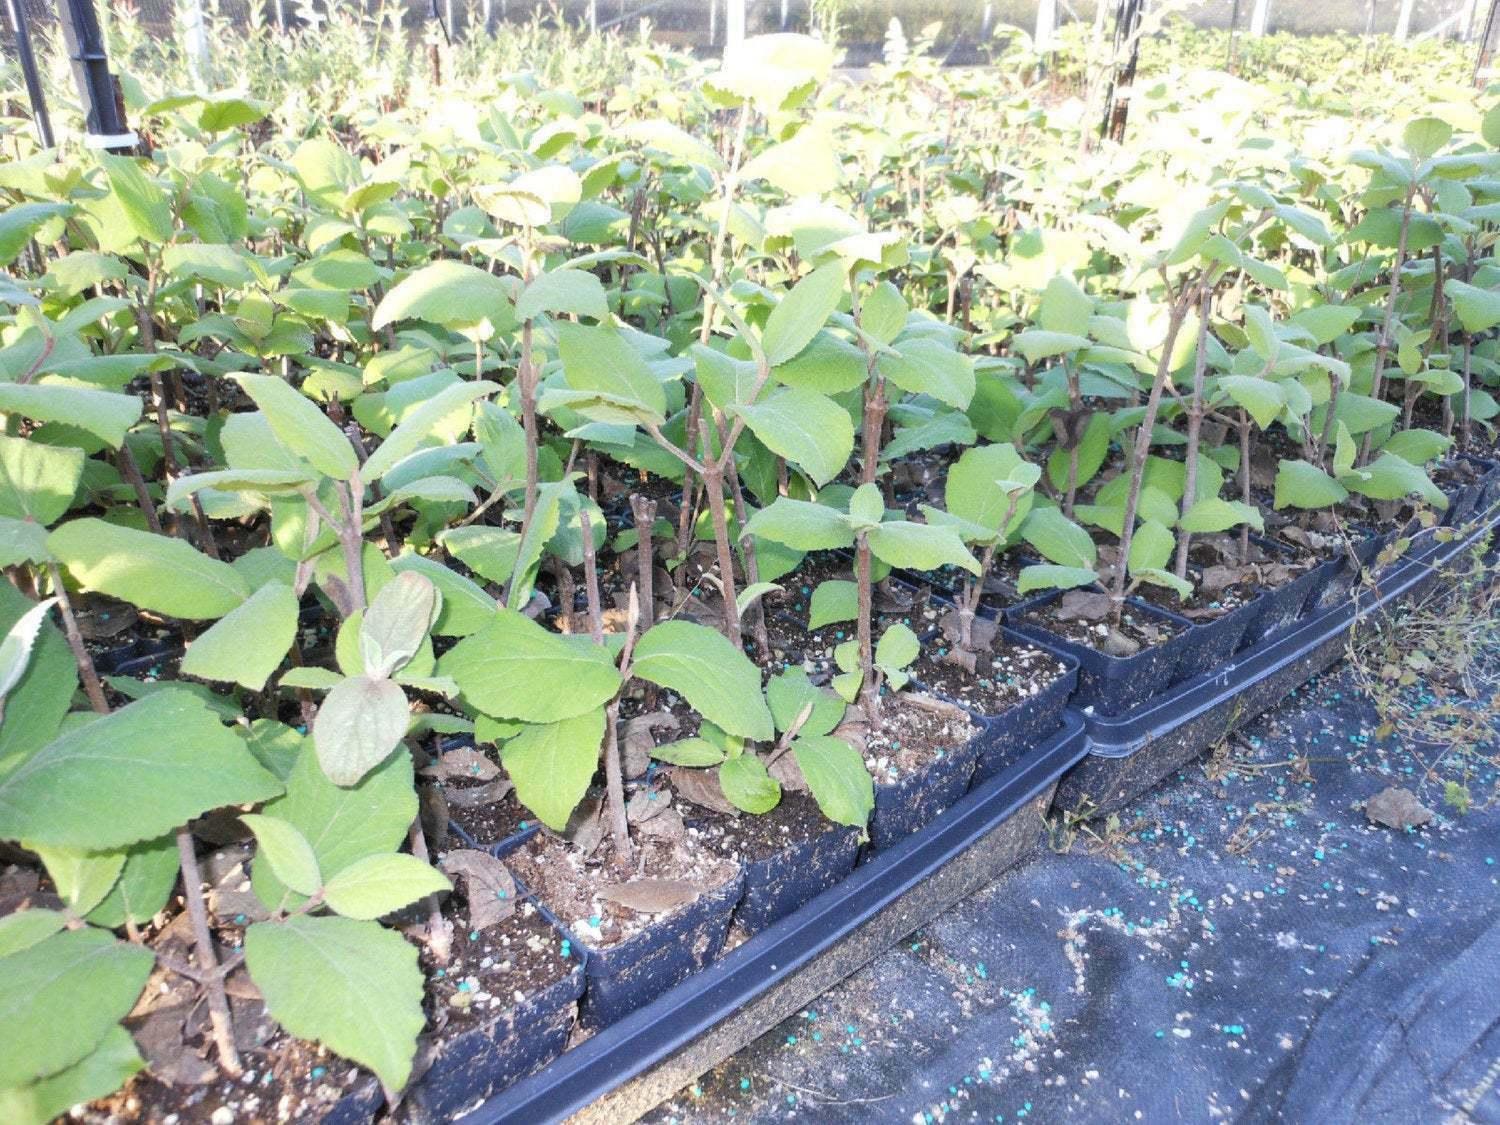 2 Juddi Viburnum Shrubs - Live Potted Plants - 6-12" Tall Seedlings - 3" Pots - The Nursery Center